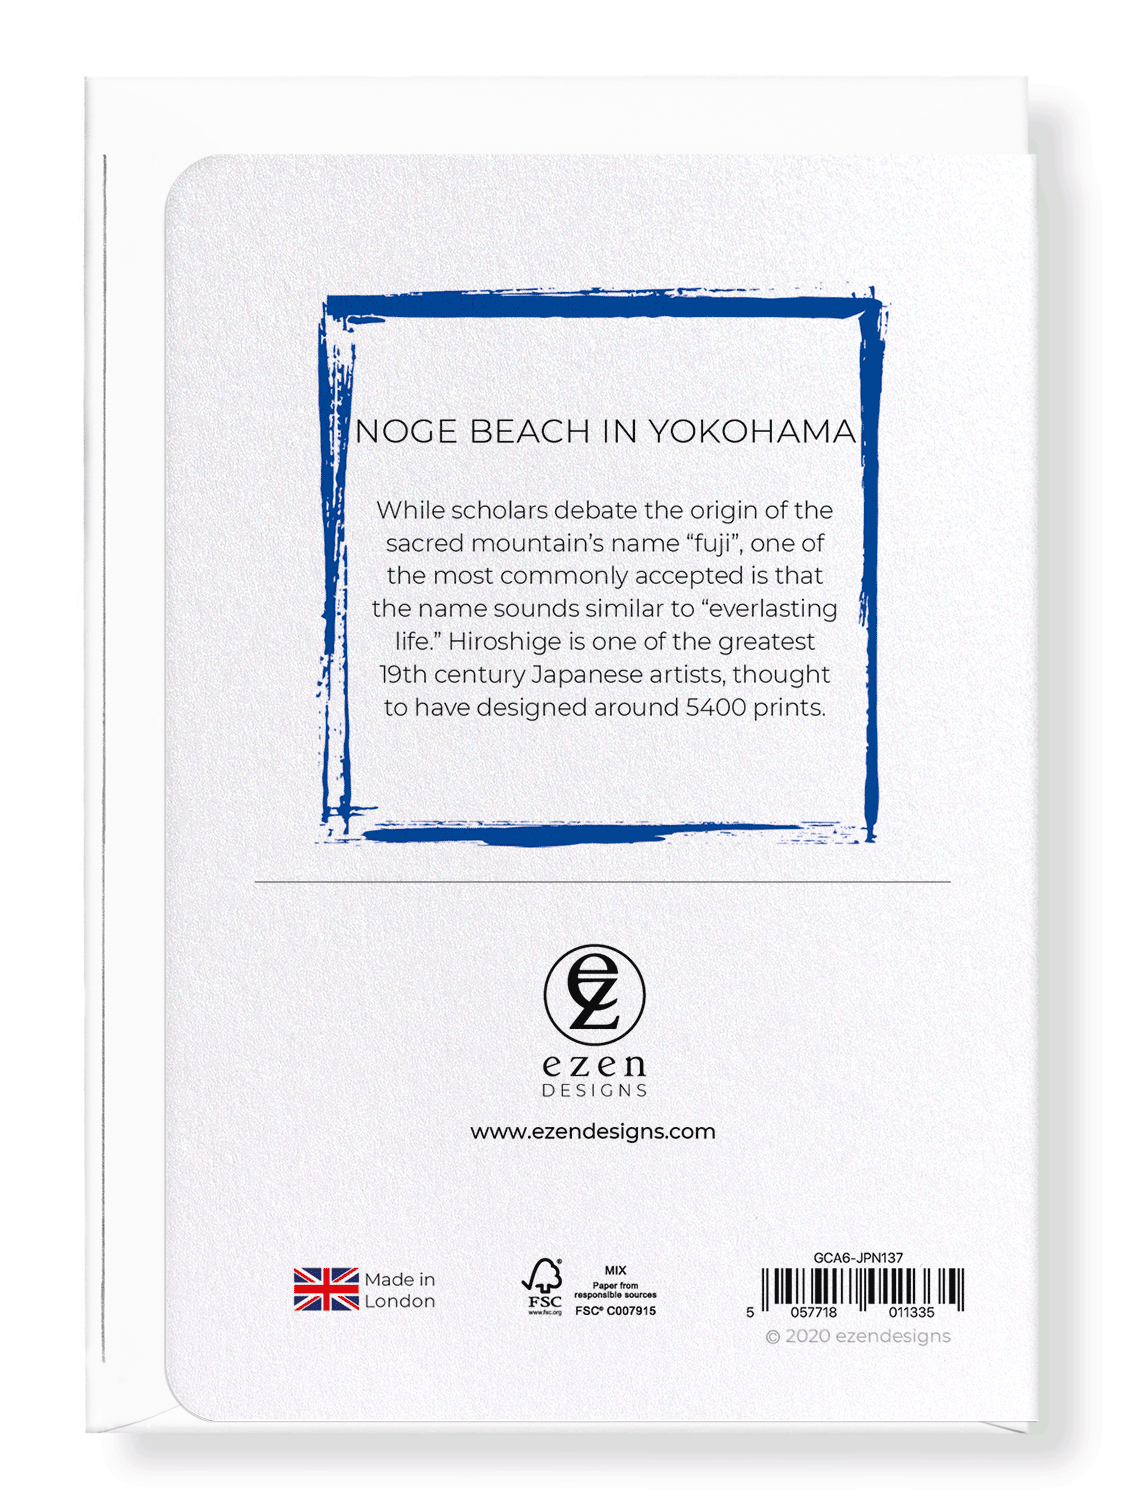 Ezen Designs - Noge beach in yokohama - Greeting Card - Back